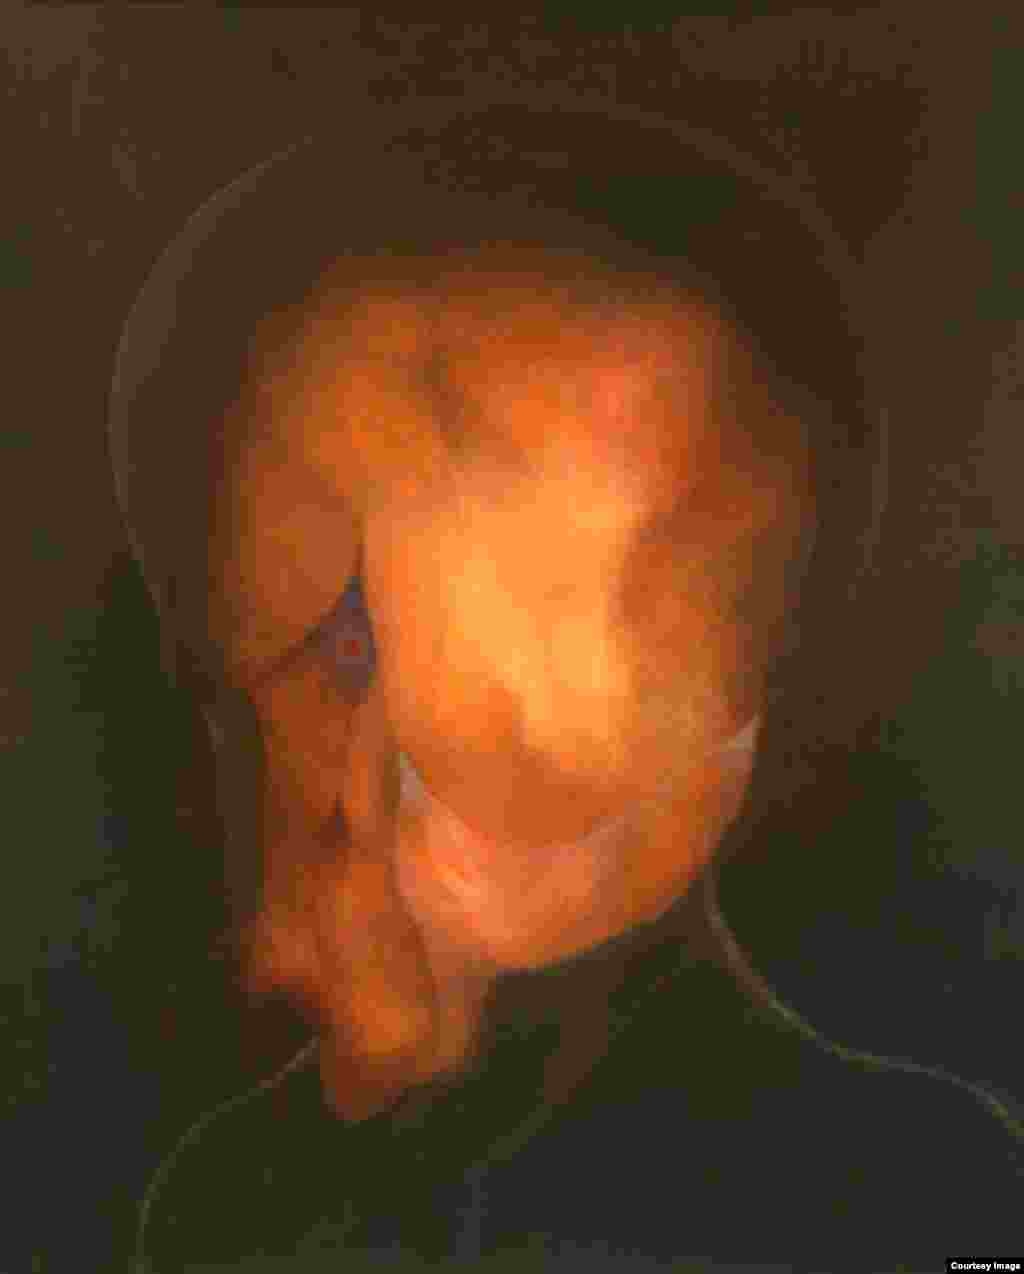 Rafael Soriano. "Fue un poeta (He Was a Poet)", 1982 Oil on canvas/óleo sobre lienzo 30 x 24 inches (76.2 x 61 centímetros). Rafael Soriano Family Collection/Colección de la Familia Rafael Soriano.